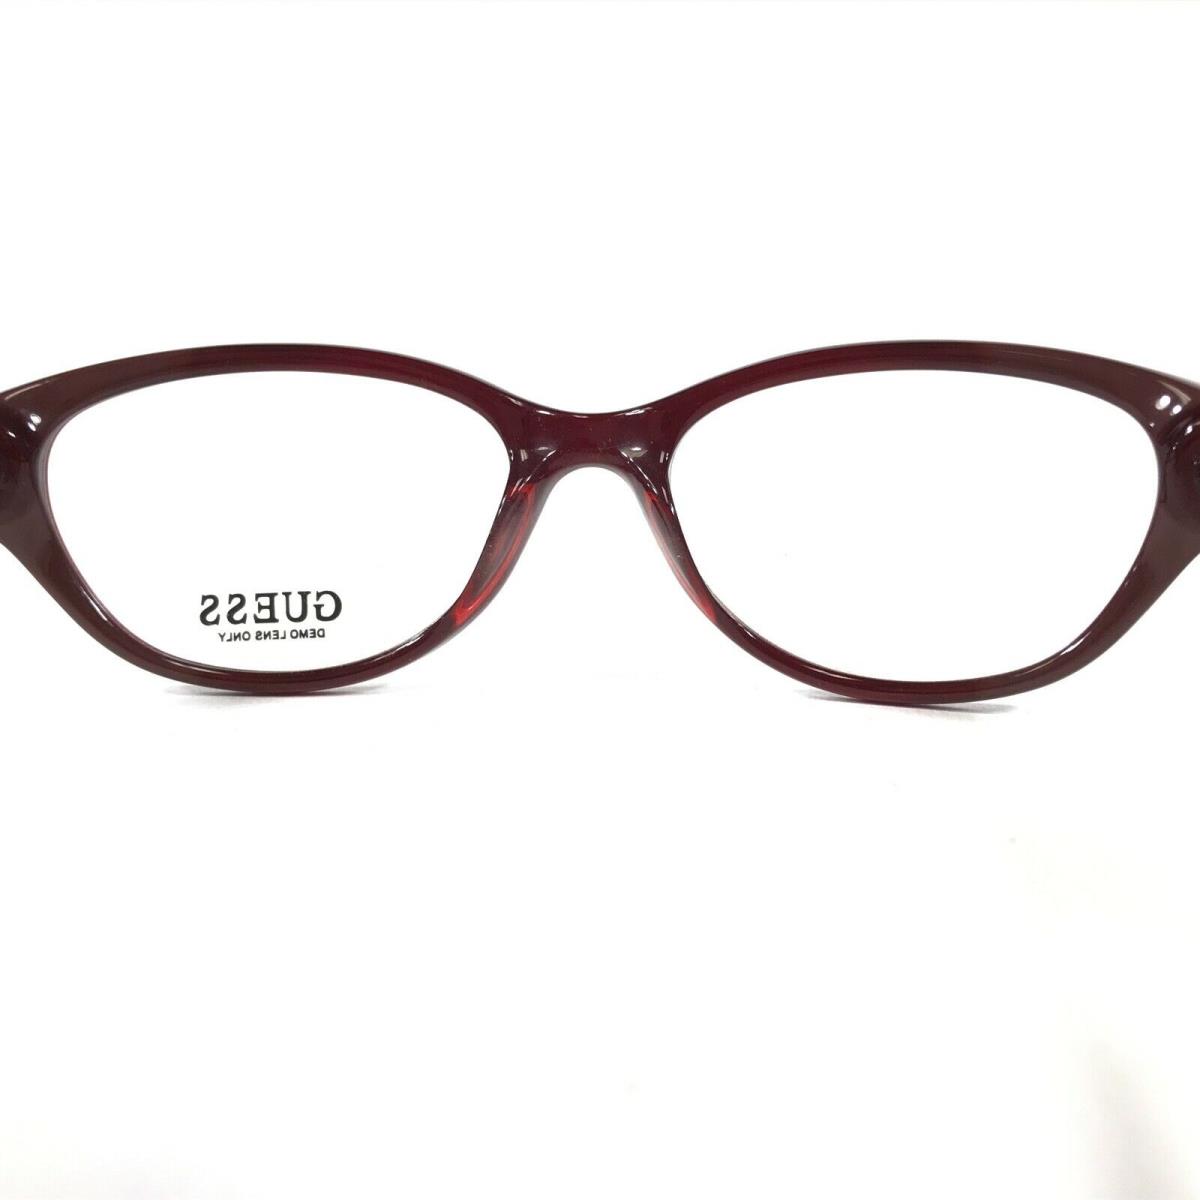 Guess eyeglasses PURBU - Multicolor Frame 8